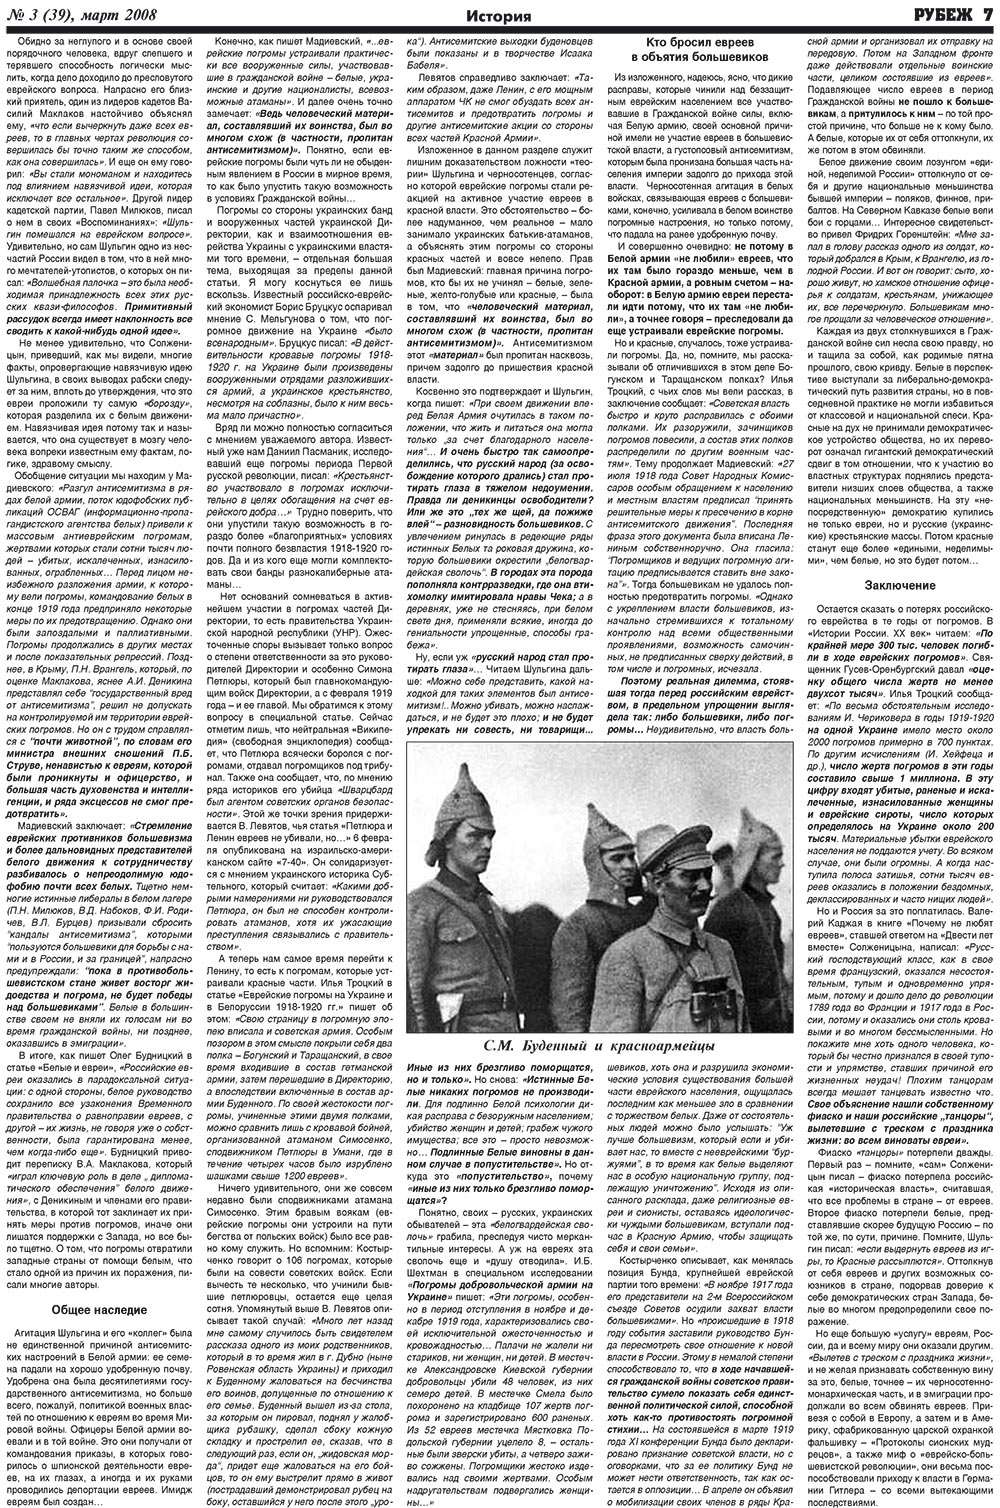 Рубеж, газета. 2008 №3 стр.7